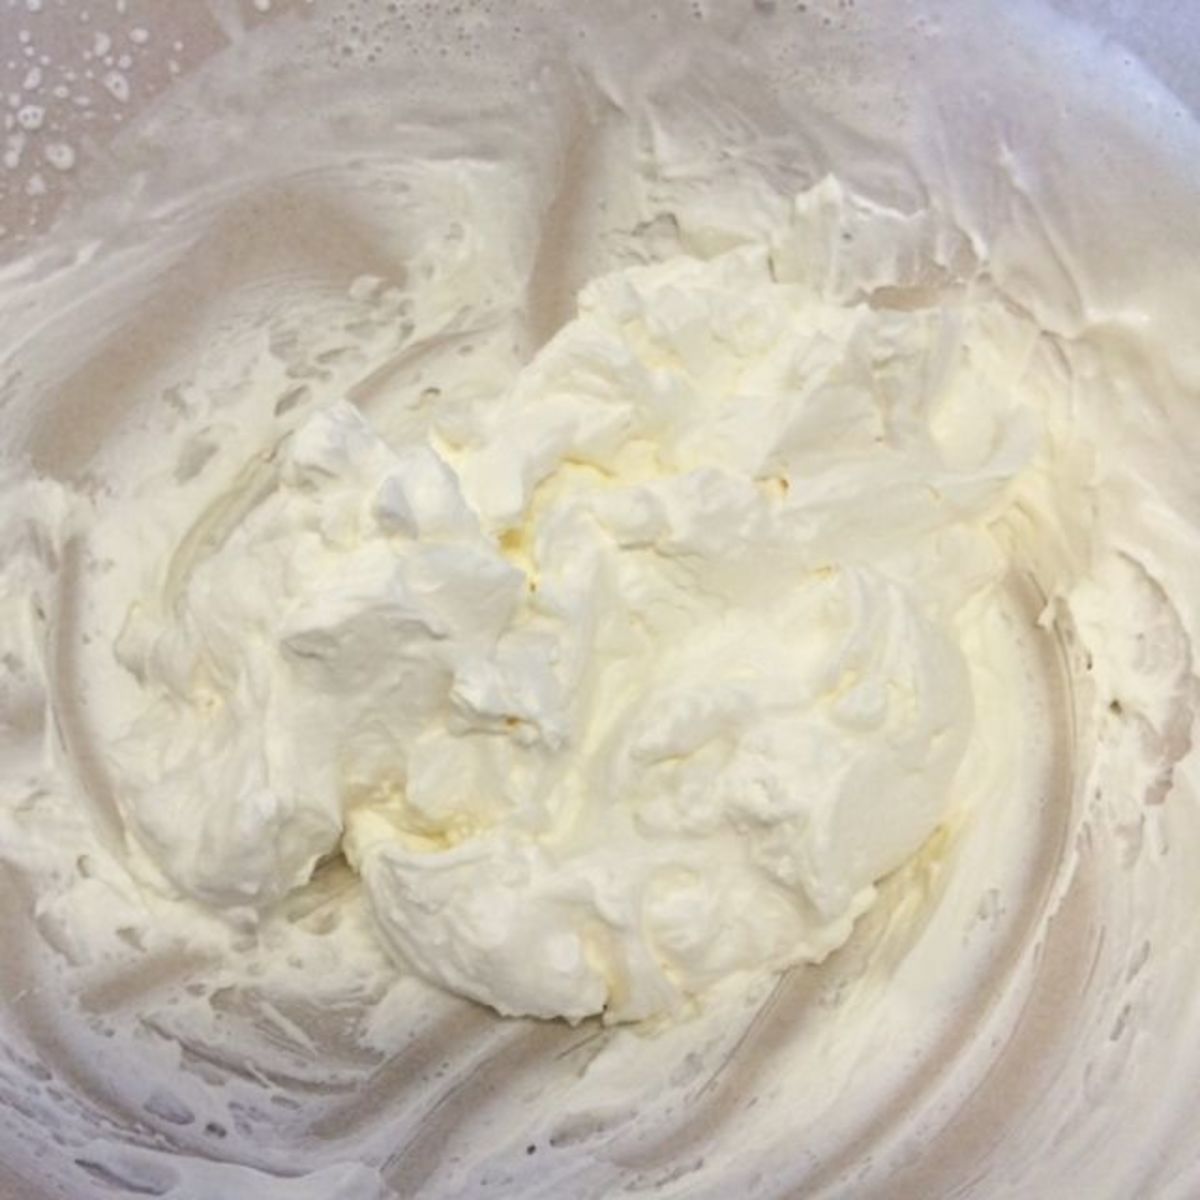 Whip the cream until stiff peaks form.